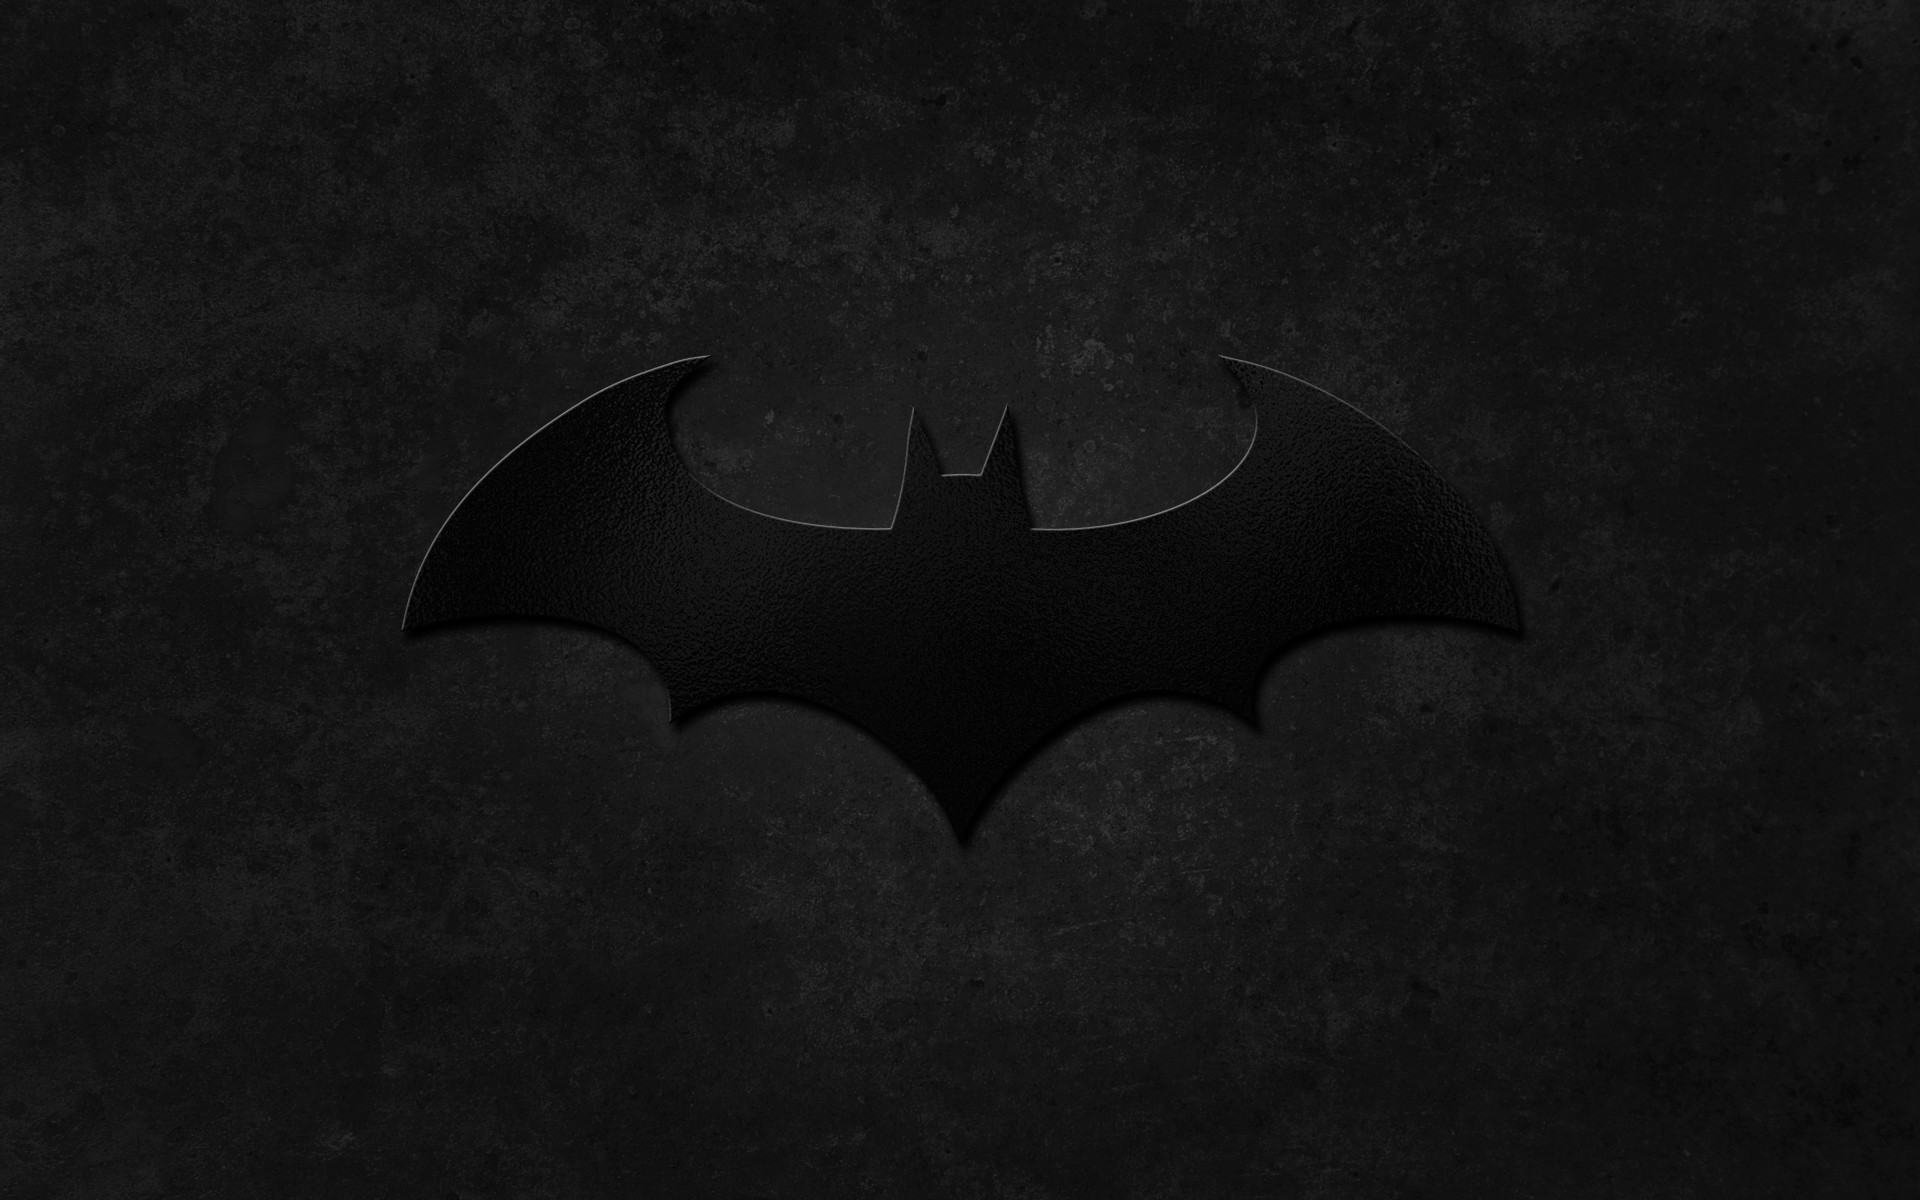 Batman Logo wallpapers For Free Download HD p HD Wallpapers Pinterest Wallpaper, Logos and Hd wallpaper